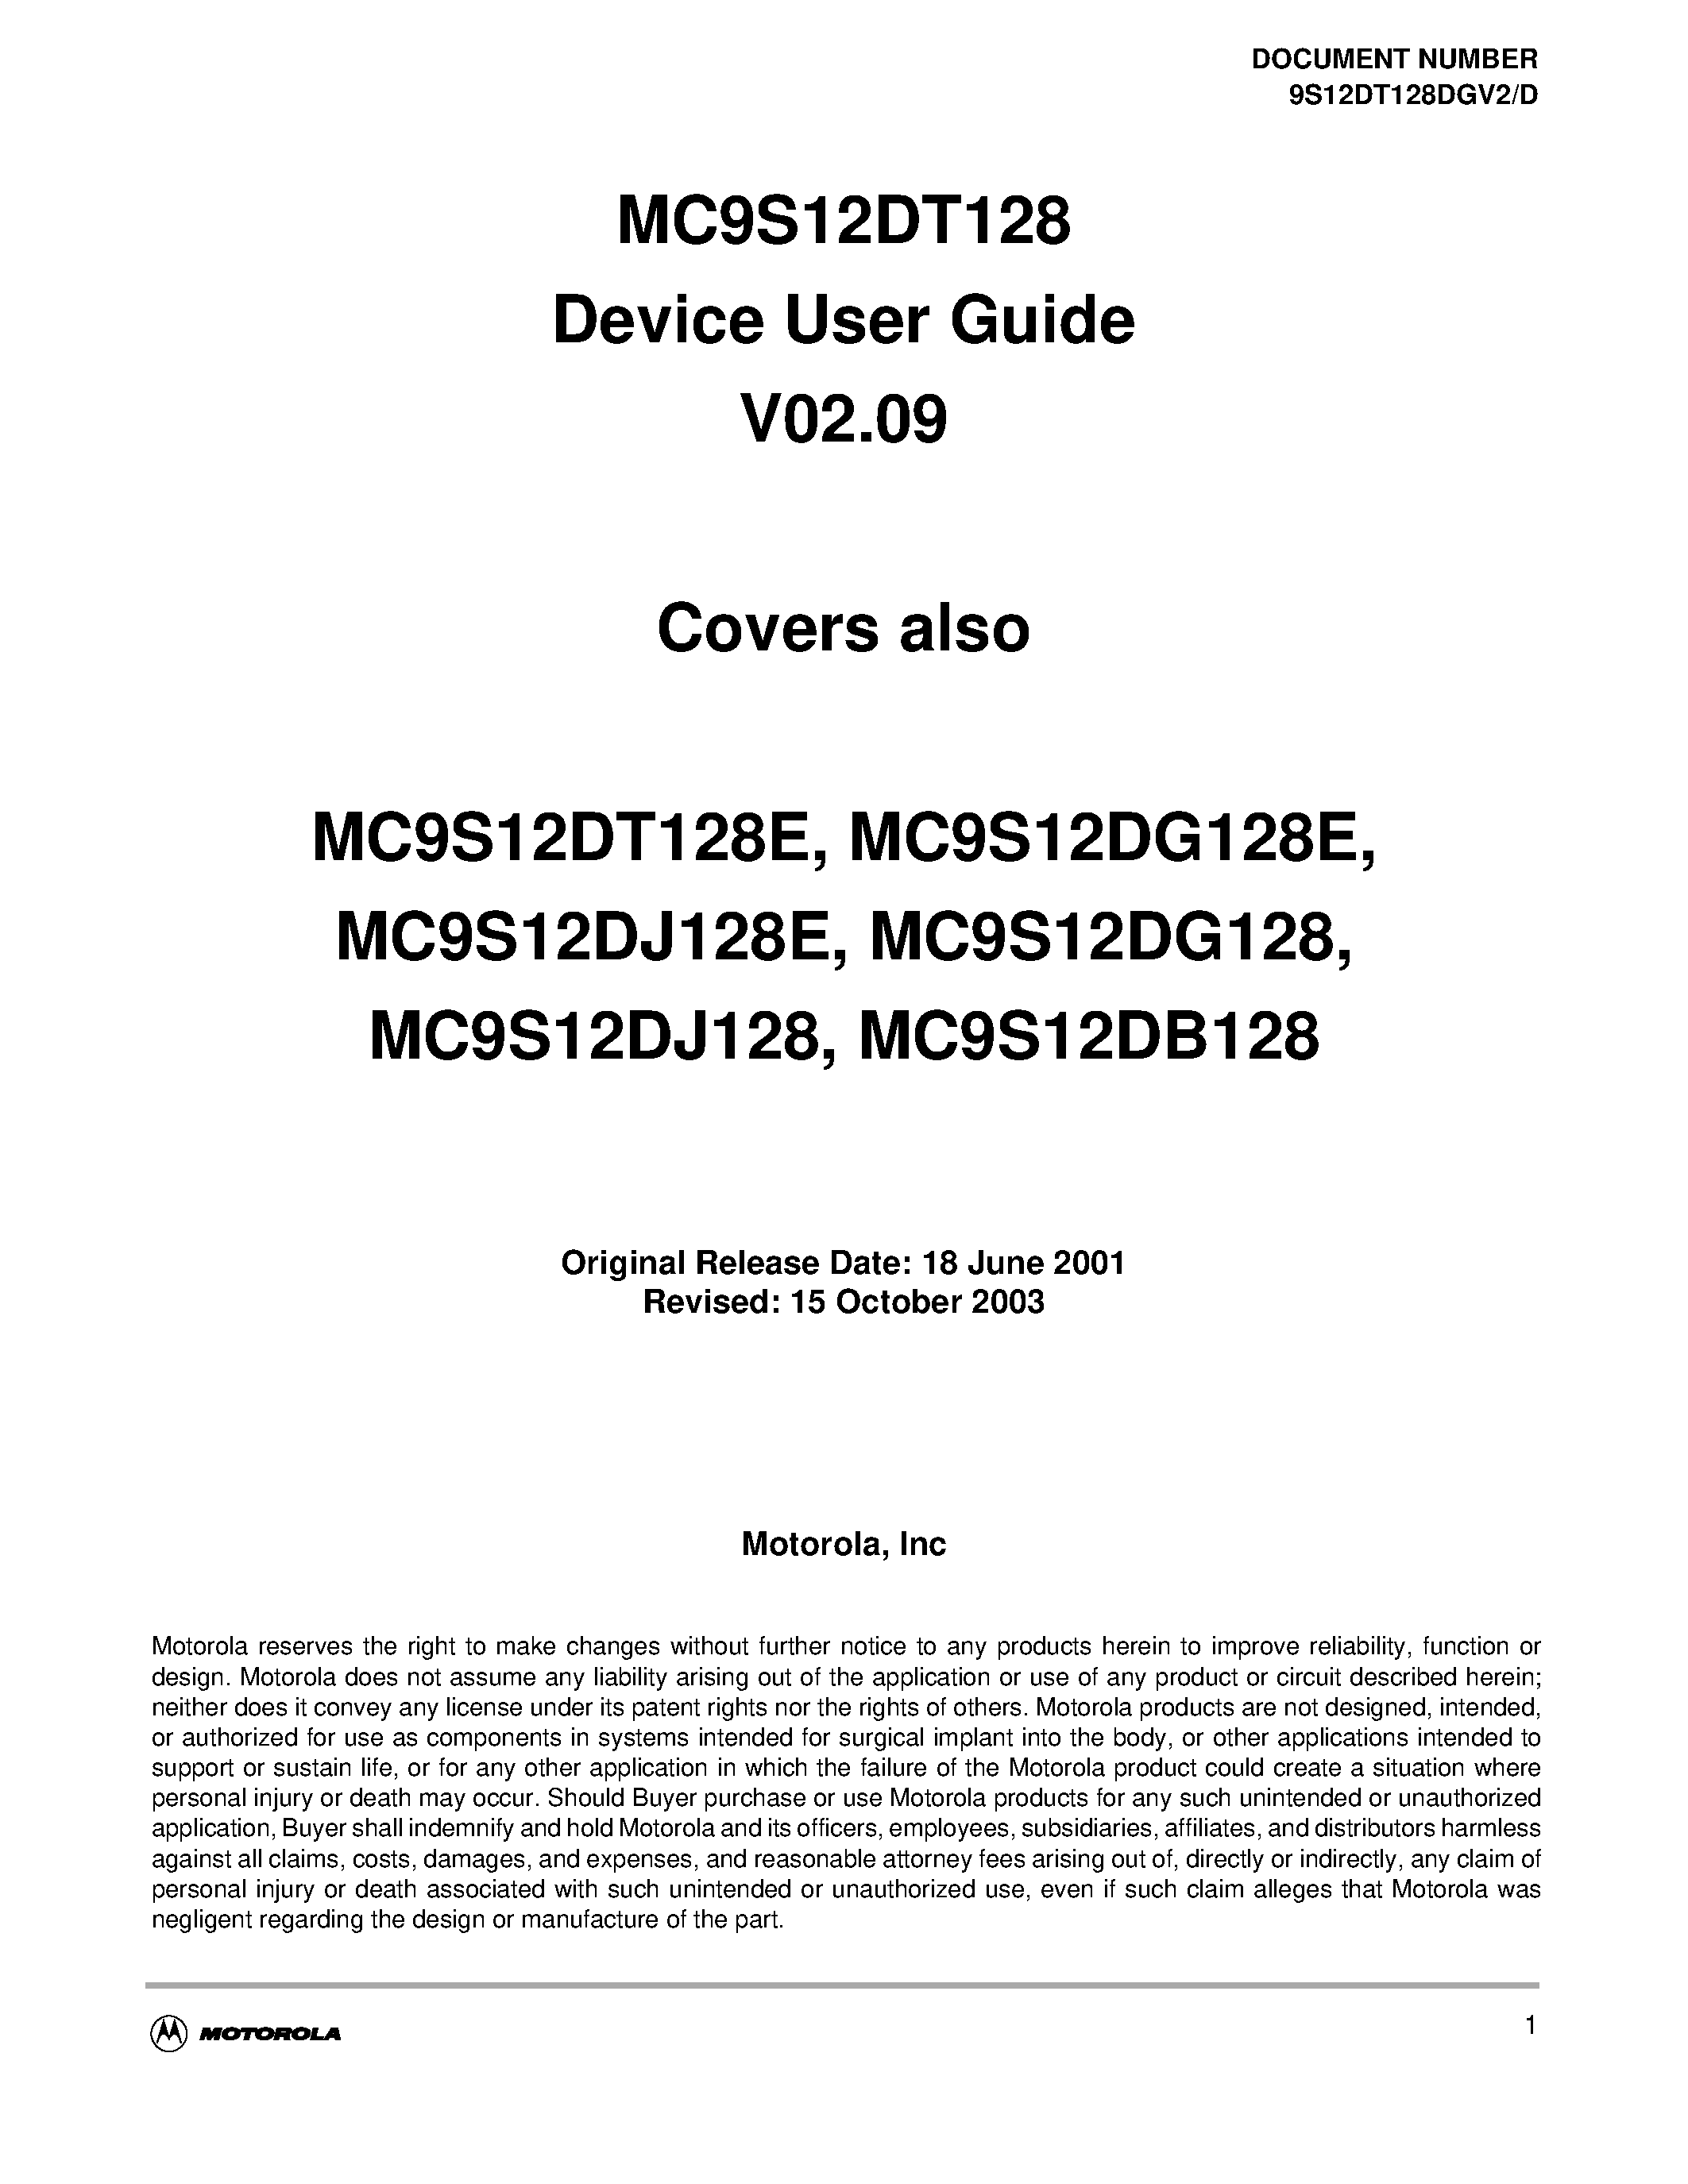 Даташит S12ECT16B8CV1 - MC9S12DT128 Device User Guide V02.09 страница 1